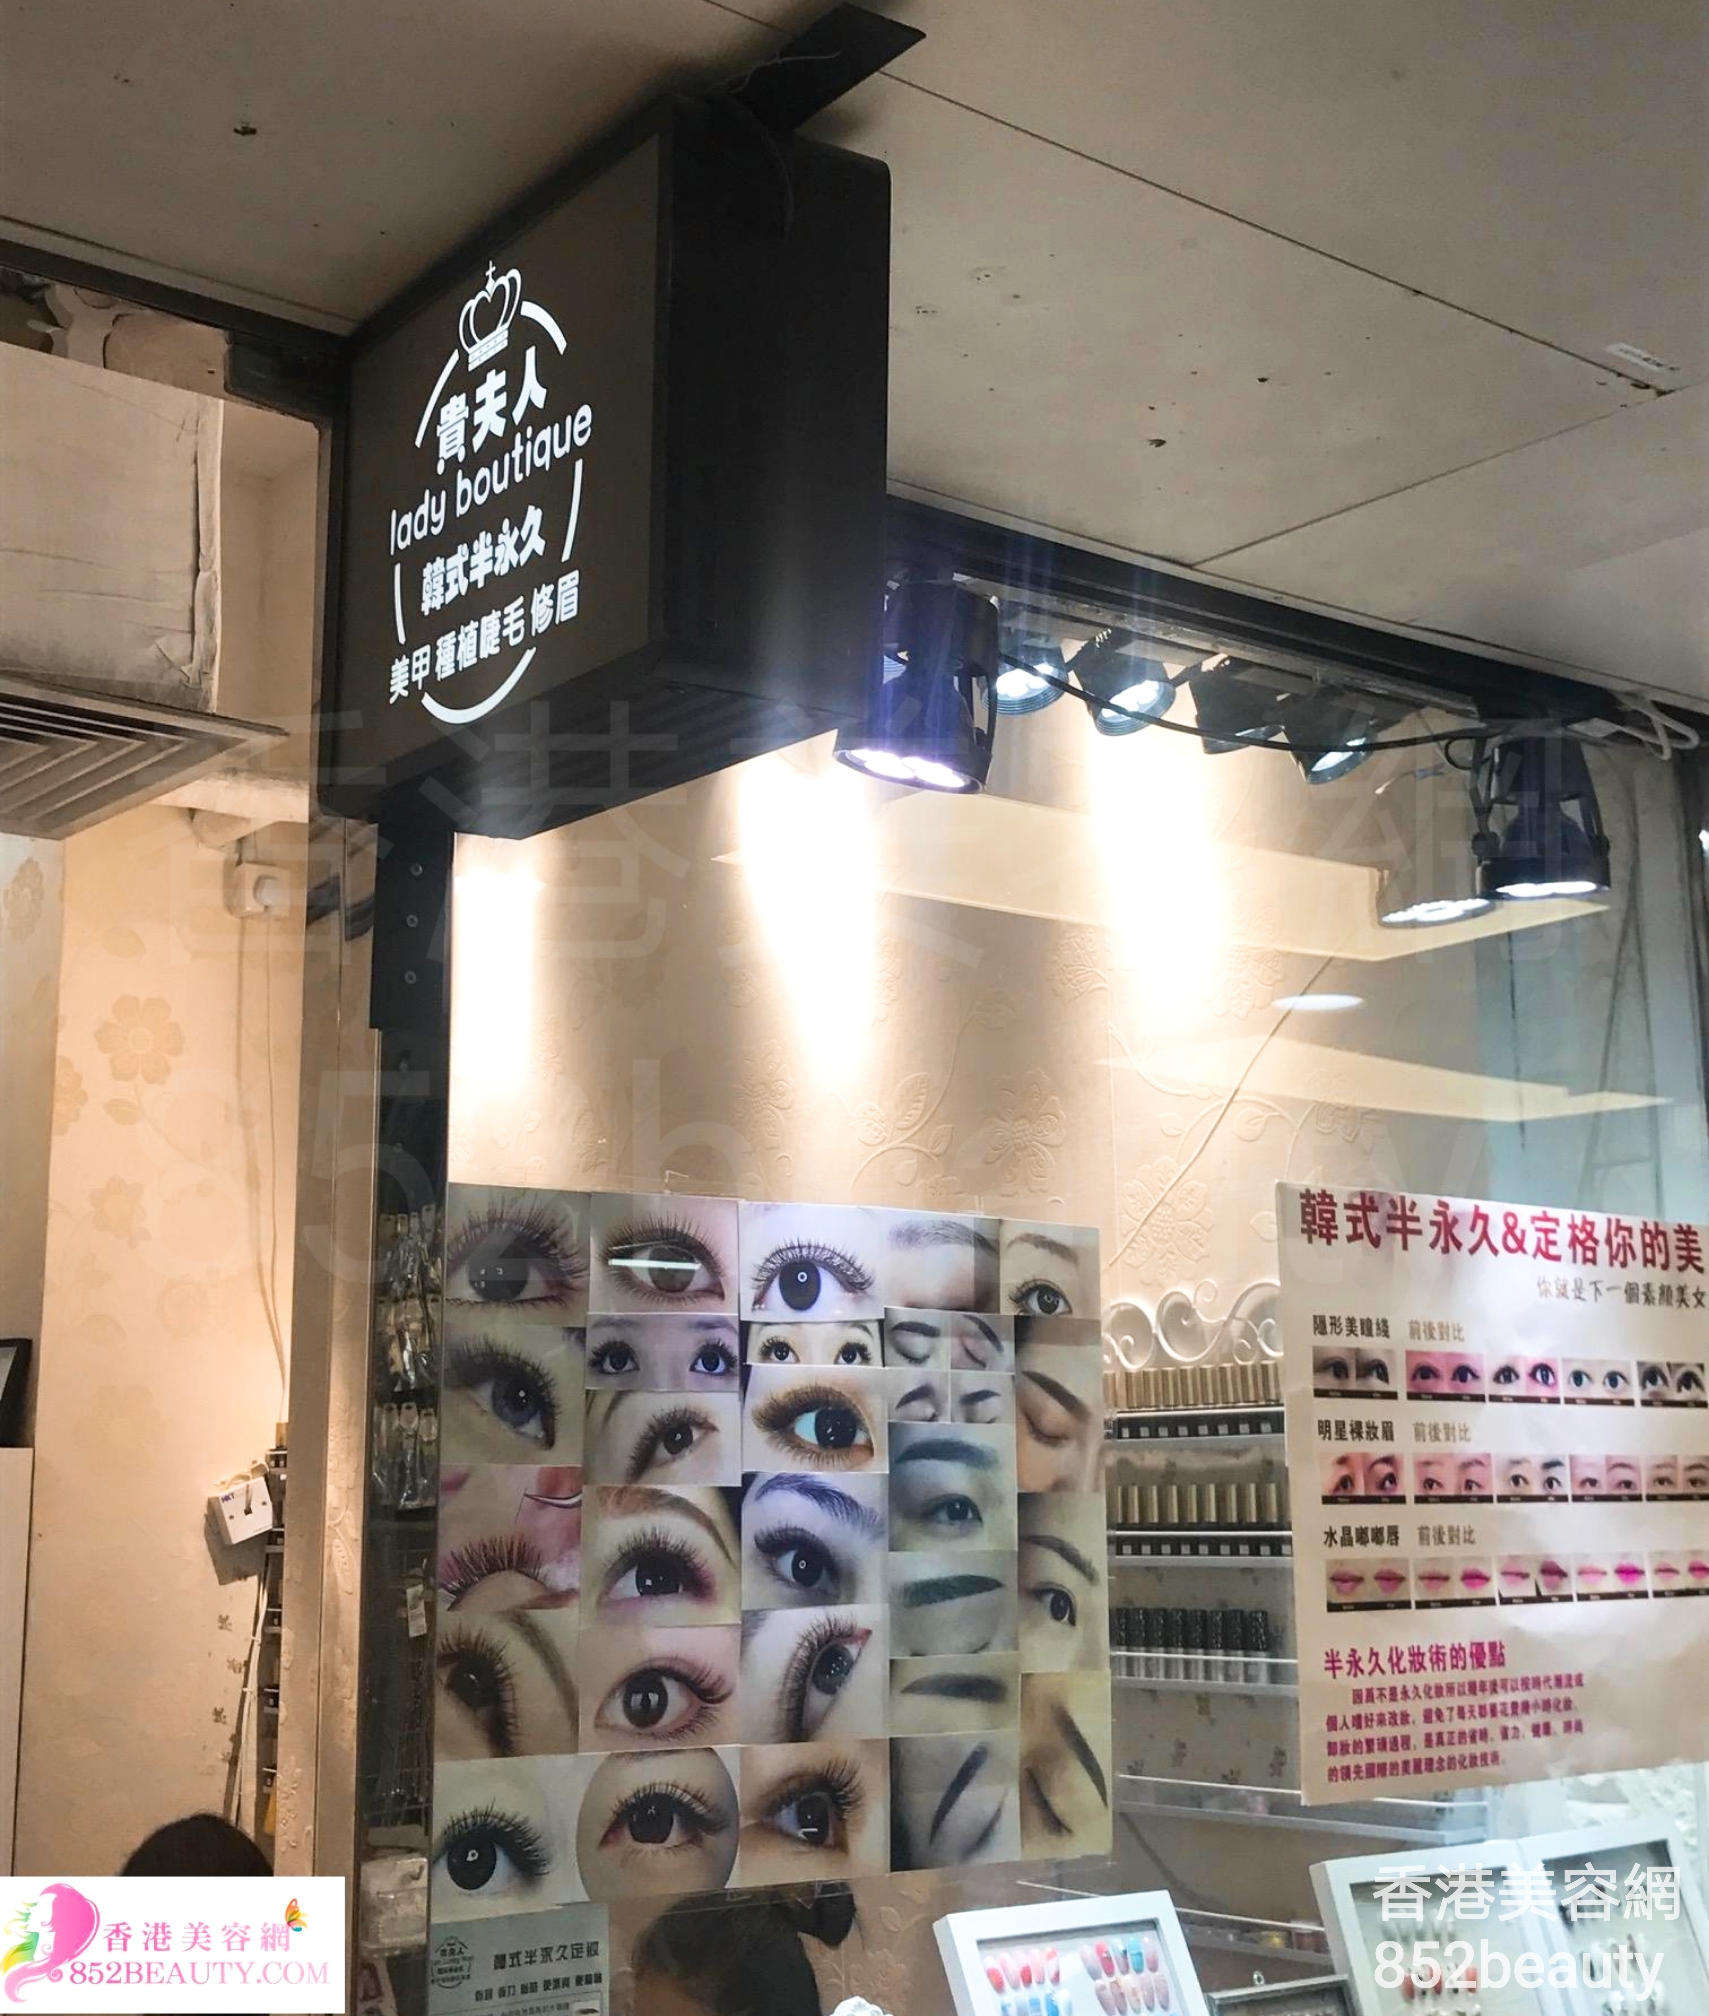 Facial Care: 貴夫人 lady boutique